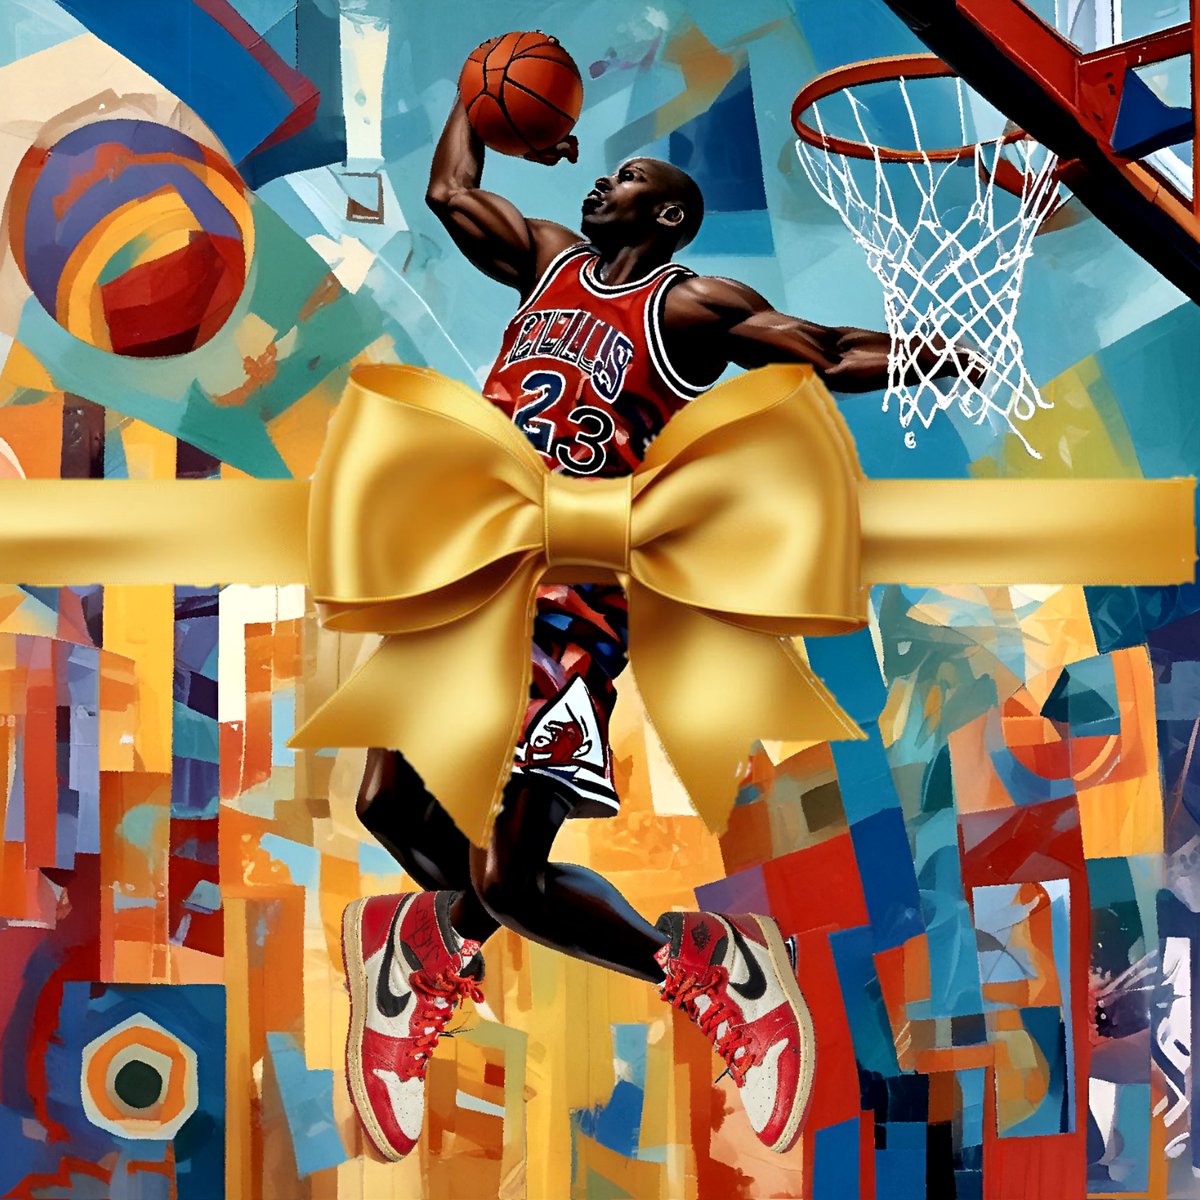 The value of the painting of Michael Jordan in mid-air, executing a powerful slam dunk. #Sports #michaeljordan #artmagazine #artcollector #picasso #socialmedia #worldnews #artnews #artfair #auctionhouse #artmuseum #nba #nbadraft #sportcollector #espnsports #espnsportcenter #nft